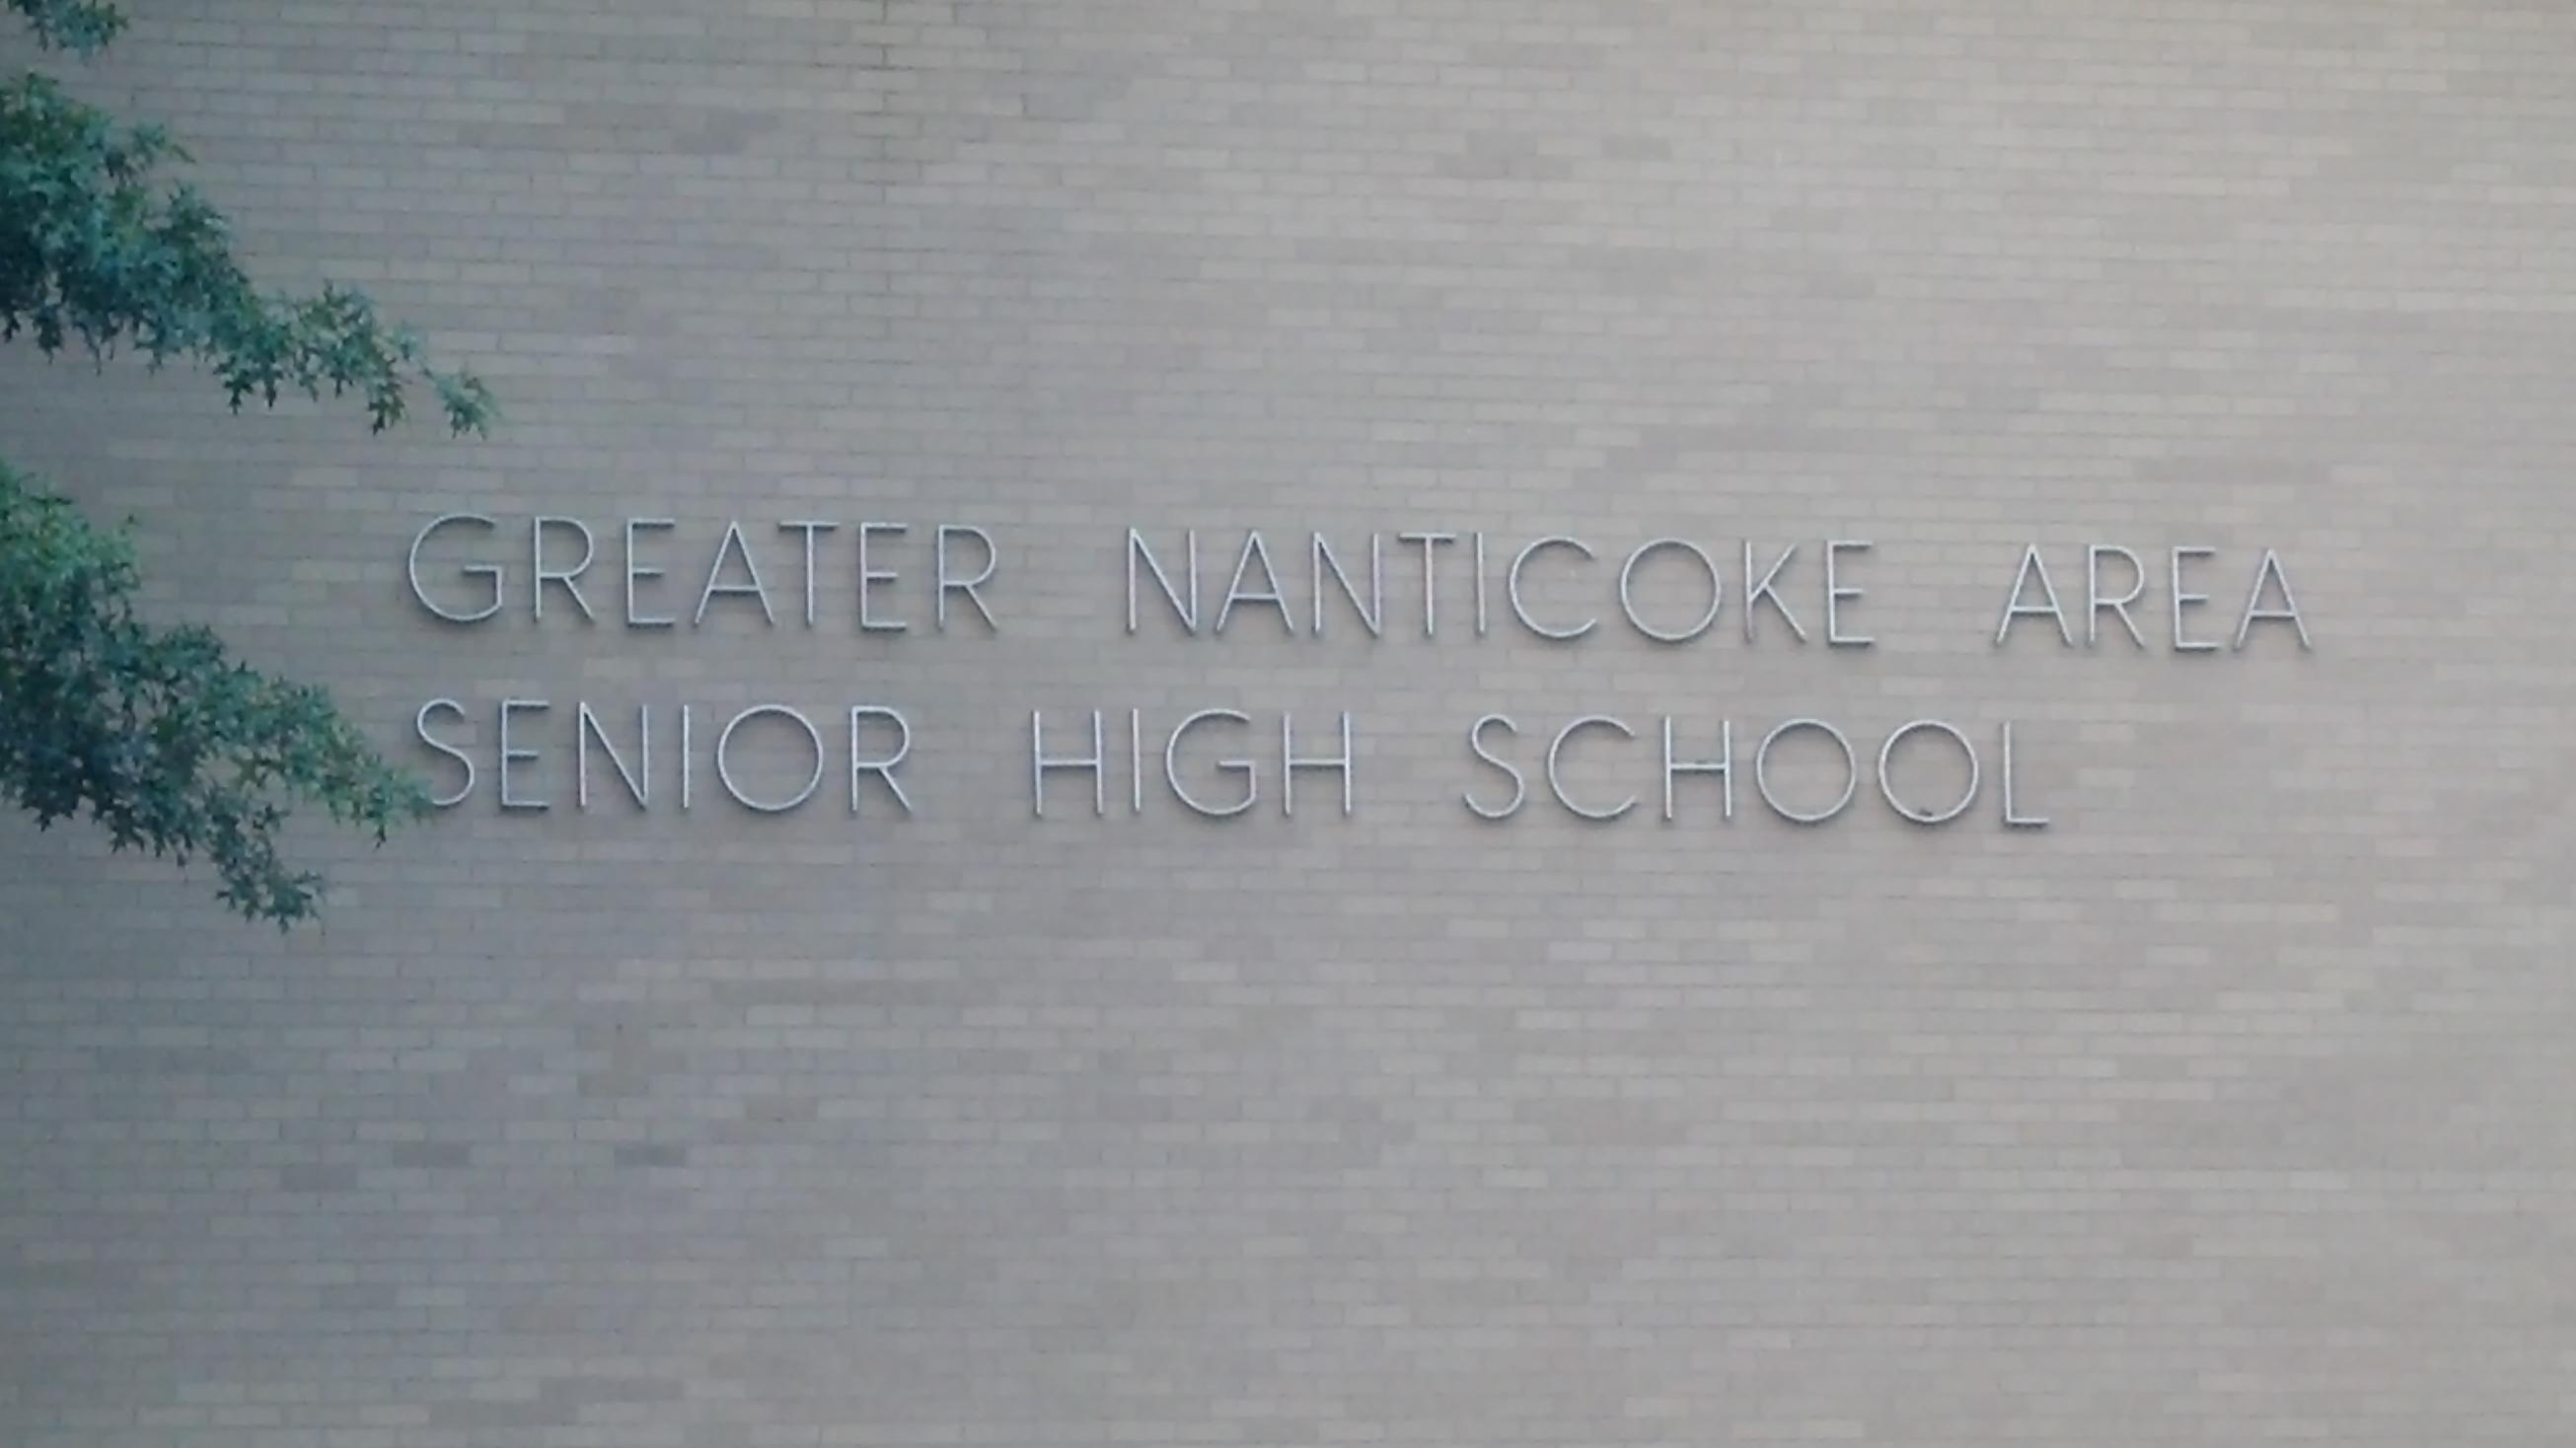 Outside the Greater Nanticoke Area High School